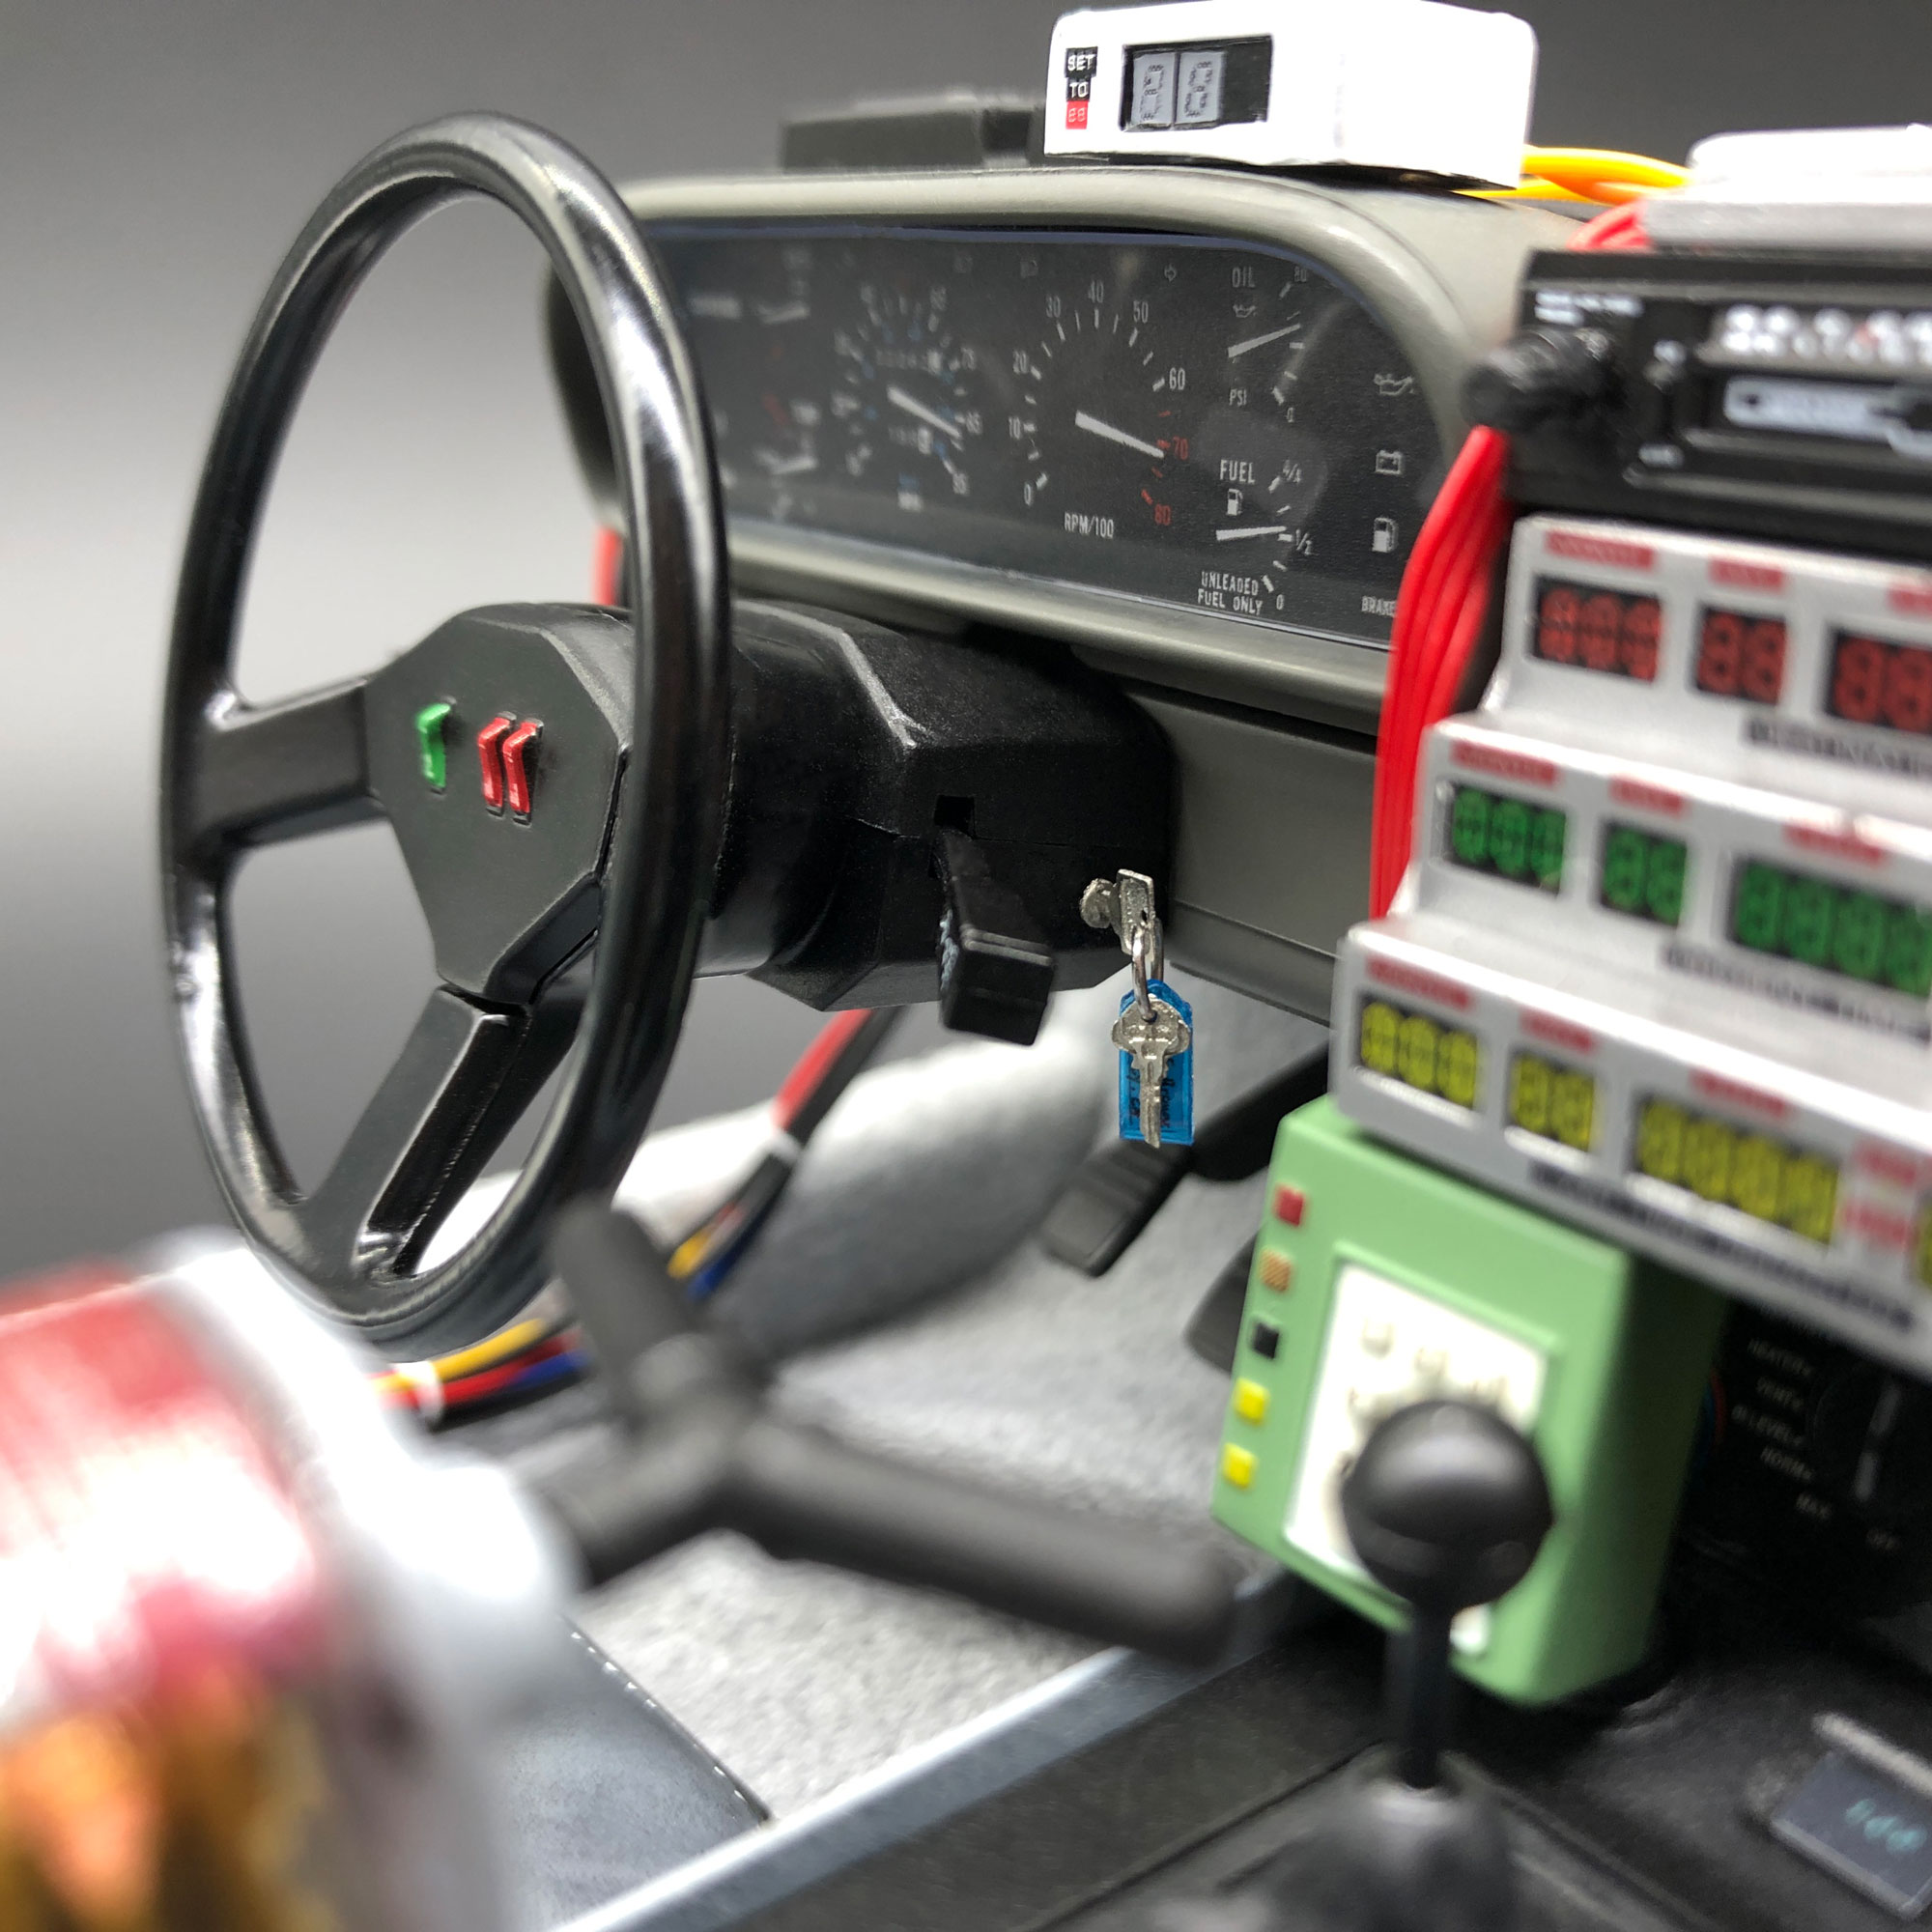 DeLorean Keys mod in model ignition